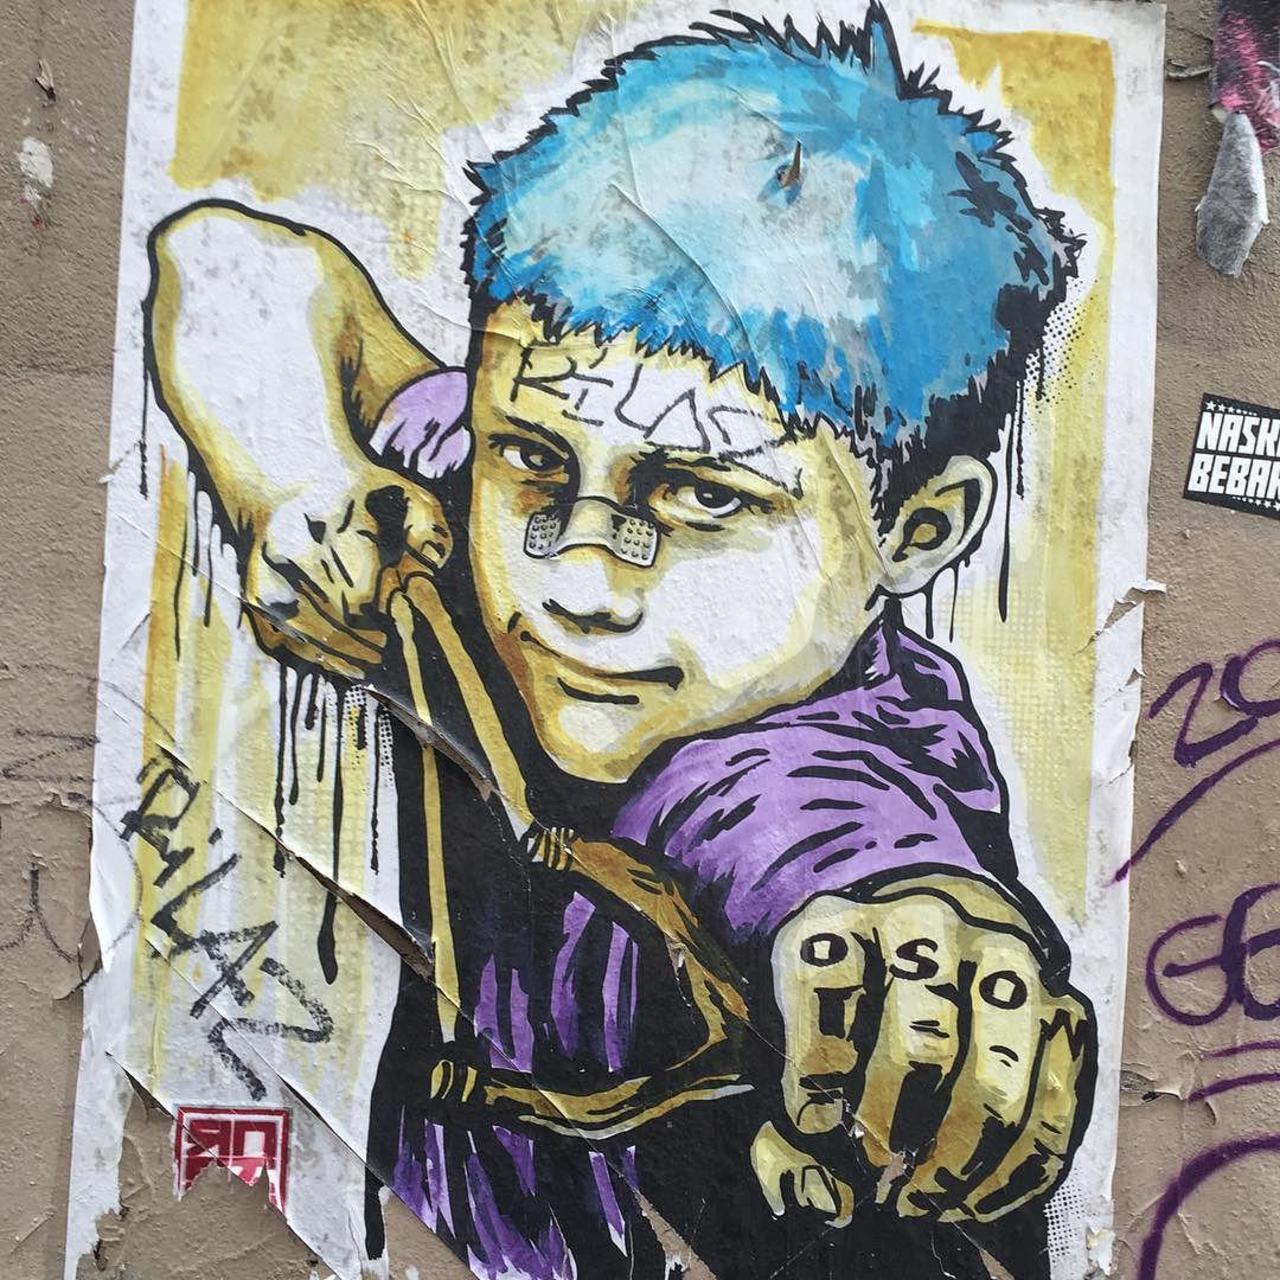 #Paris #graffiti photo by @catscoffeecreativity http://ift.tt/1Pv2fpf #StreetArt http://t.co/pFveEW2H6M